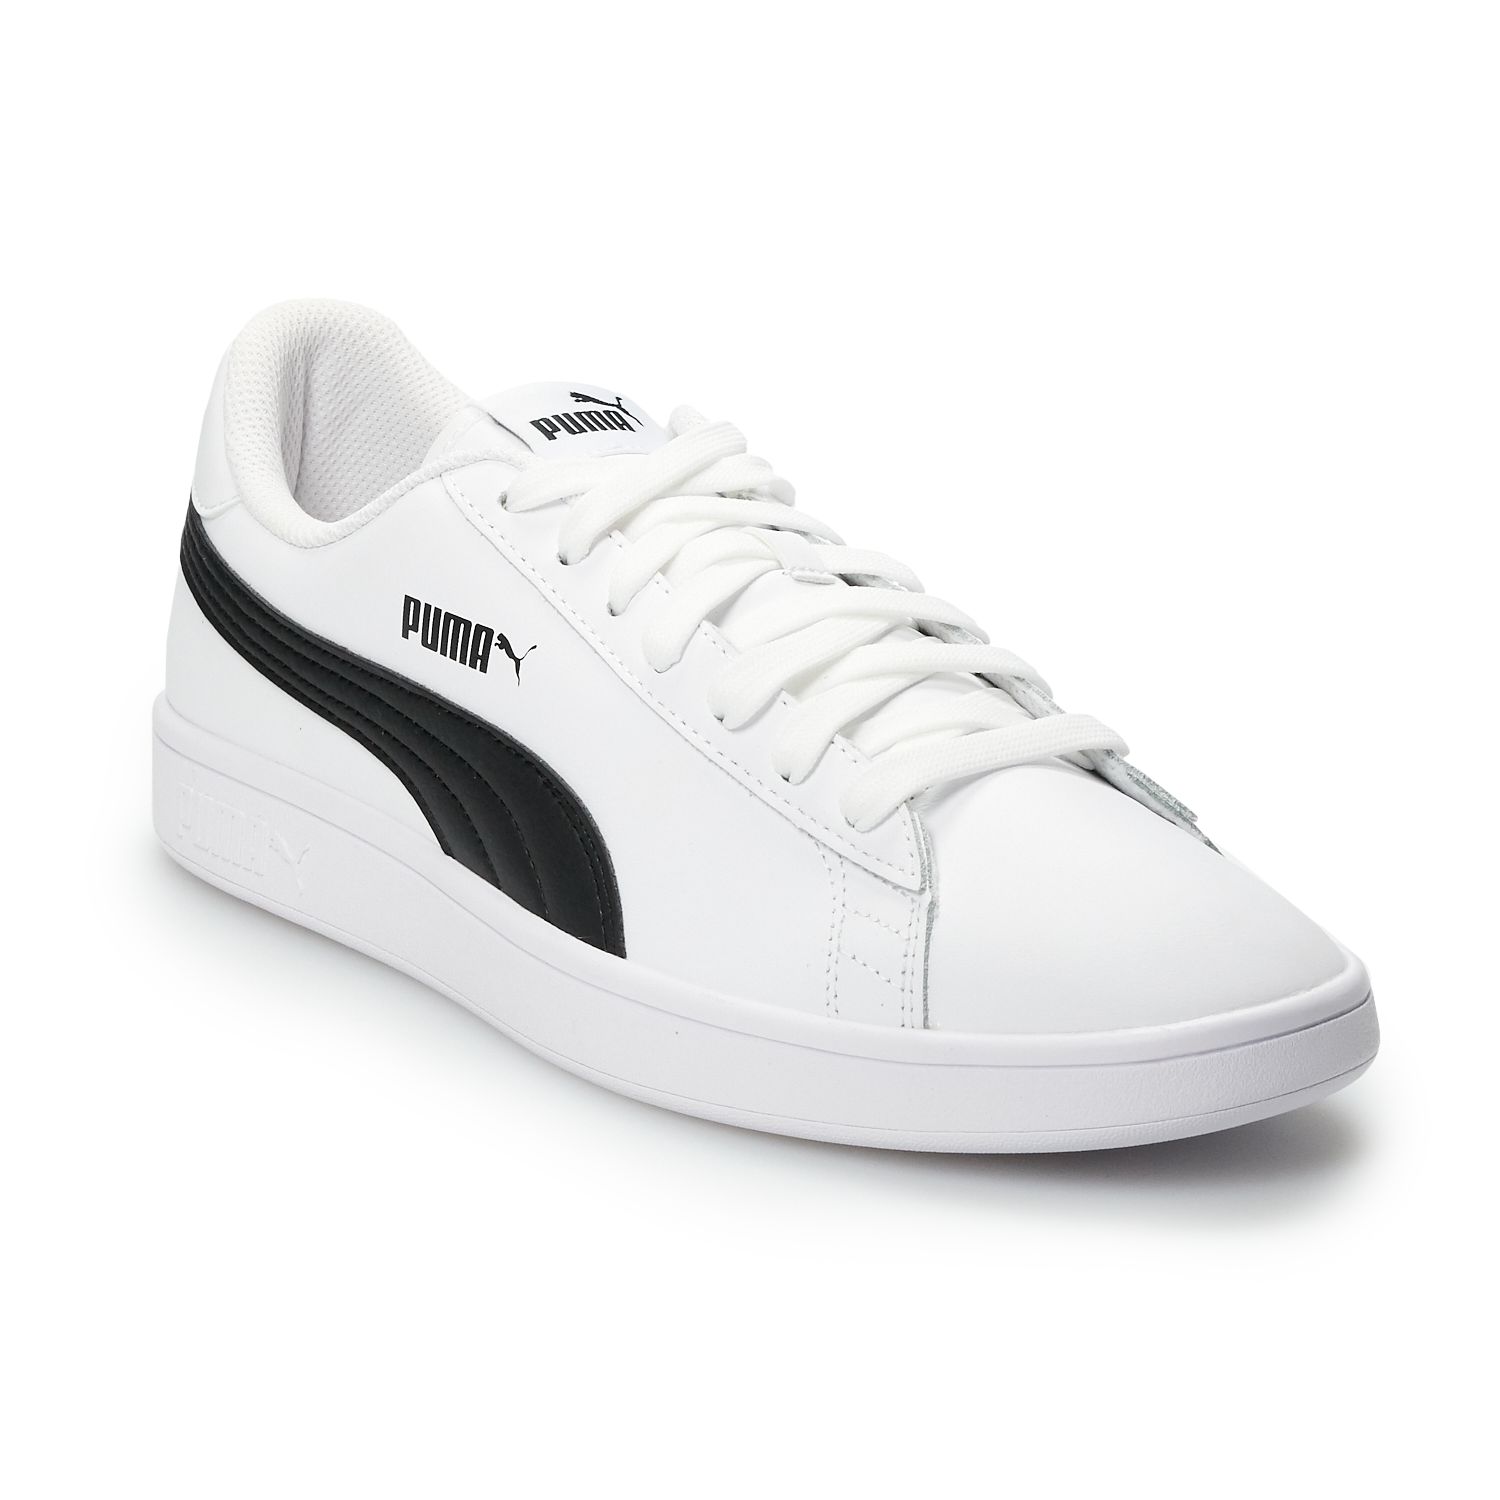 puma tennis shoes white